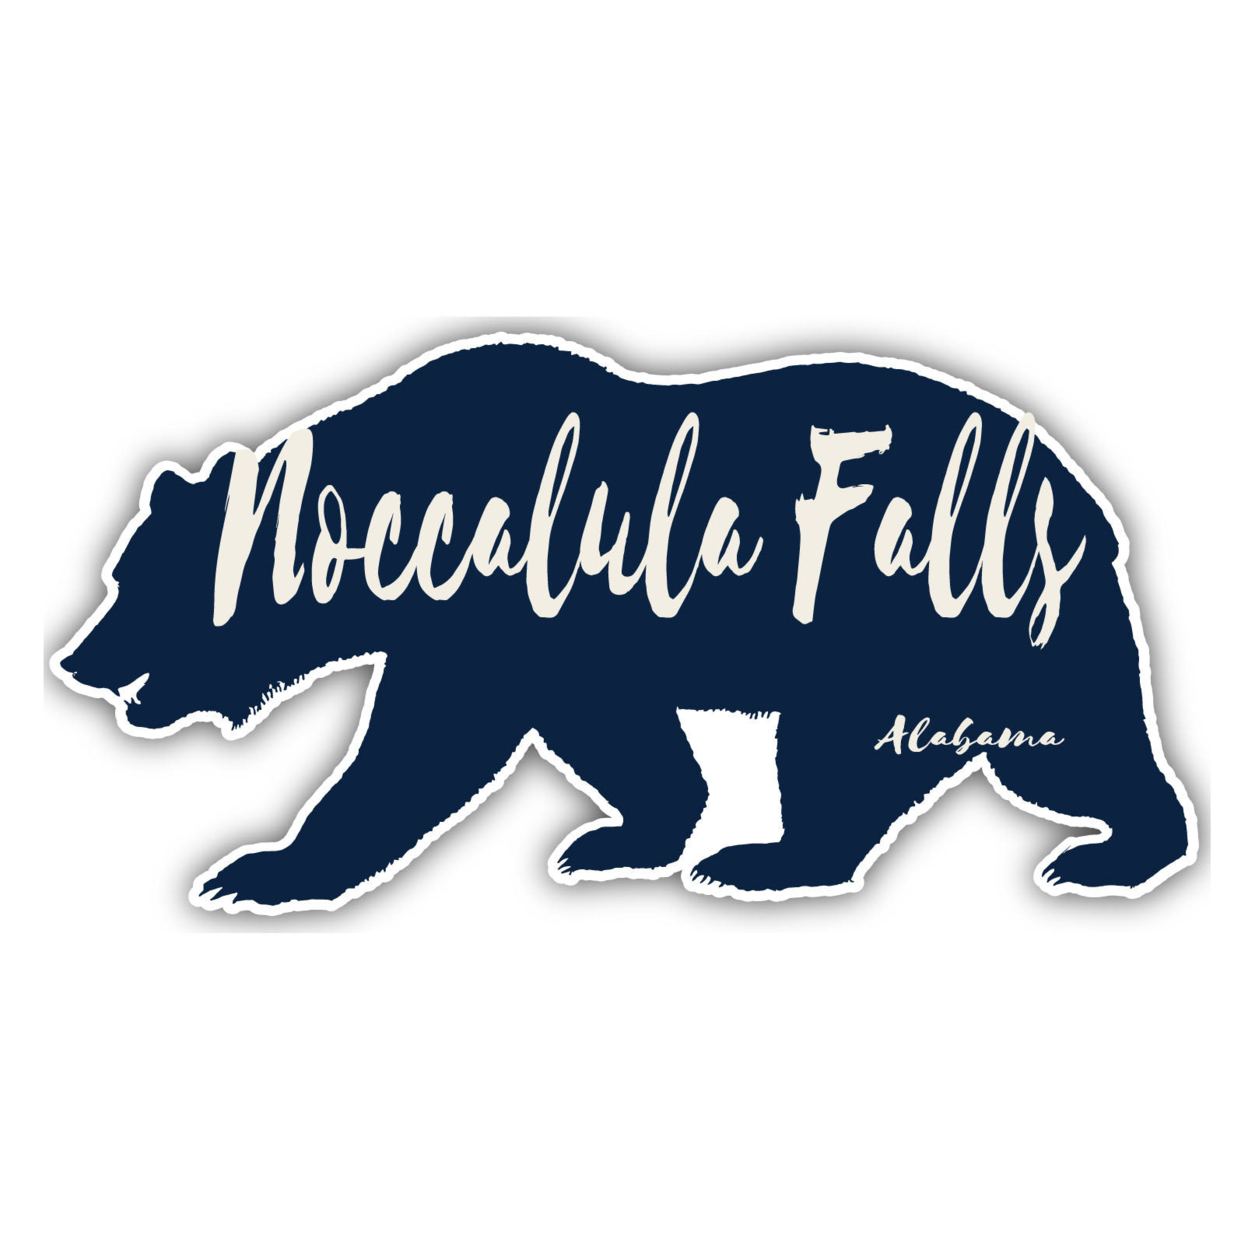 Noccalula Falls Alabama Souvenir Decorative Stickers (Choose Theme And Size) - Single Unit, 2-Inch, Adventures Awaits